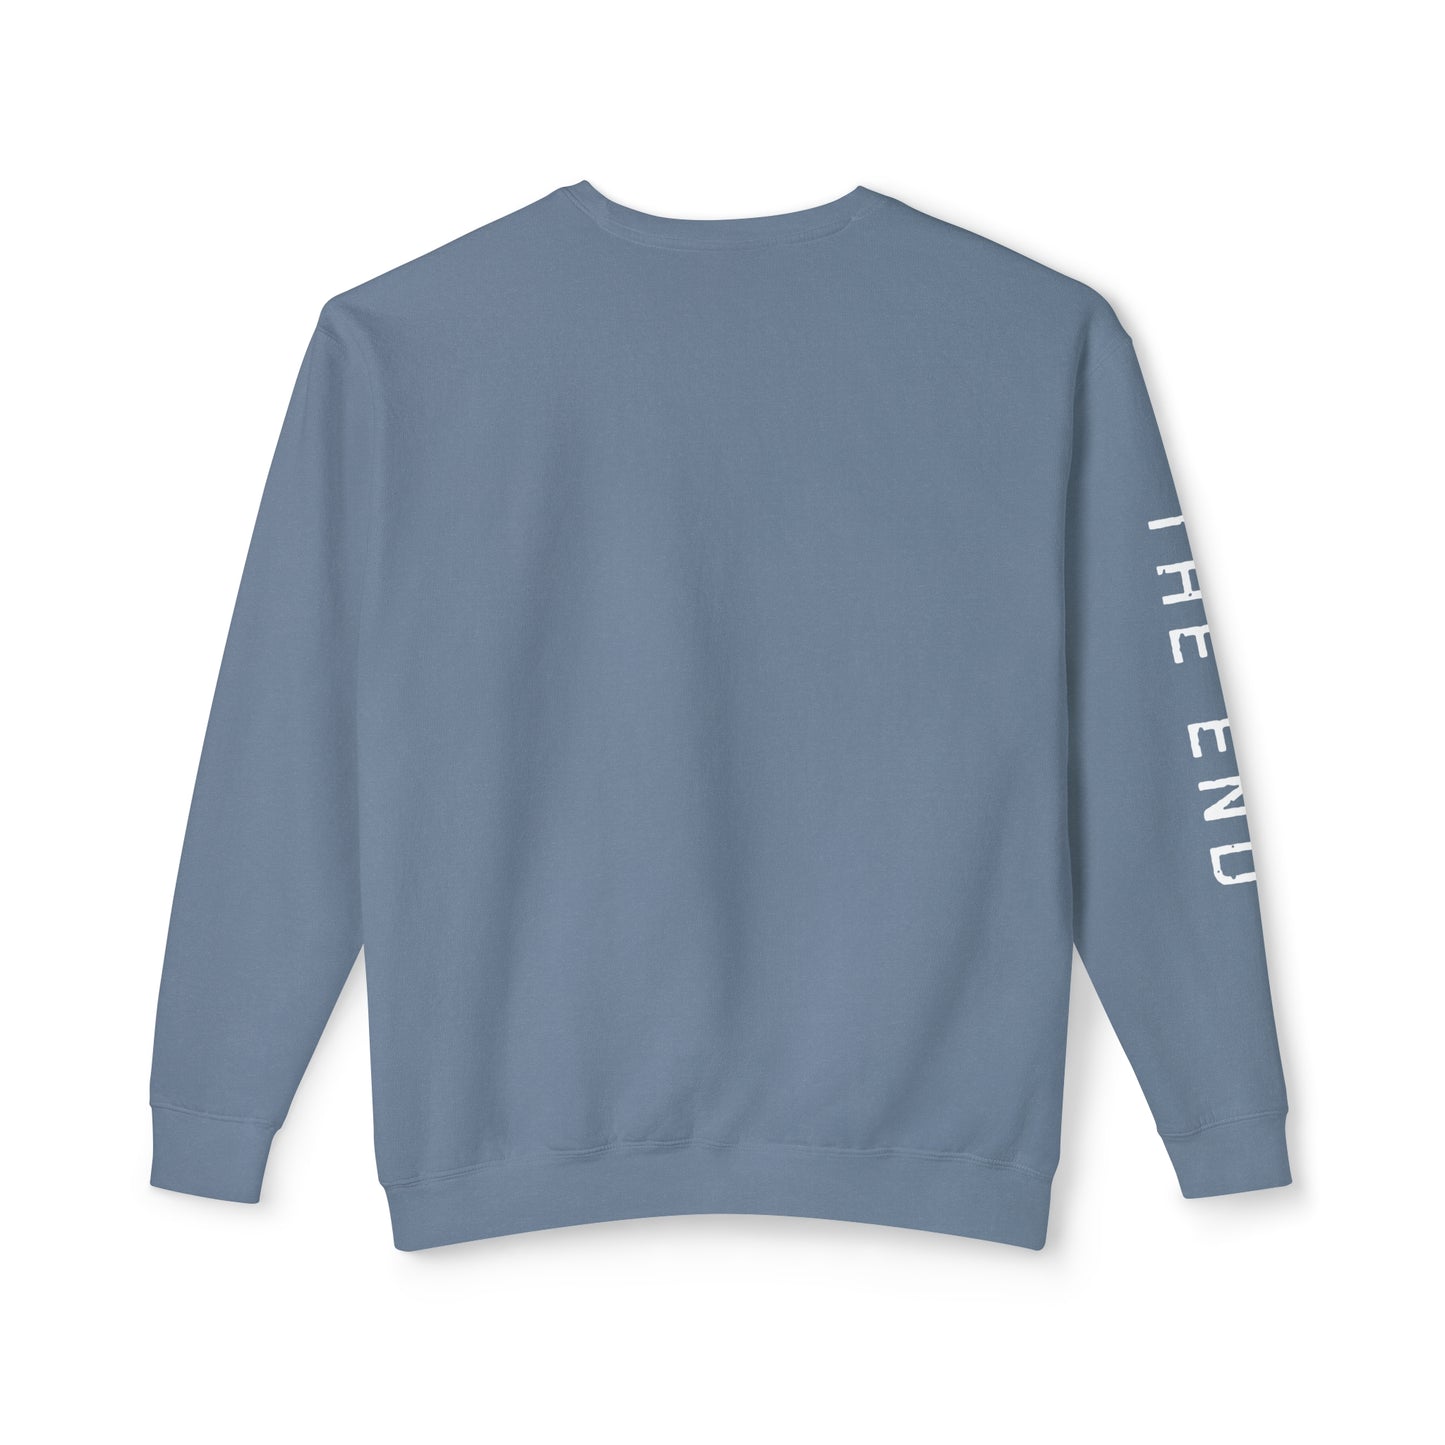 Montauk Charm Heavy Blend Crewneck Sweatshirt - Cozy & Timeless, Perfect for Montauk Lovers